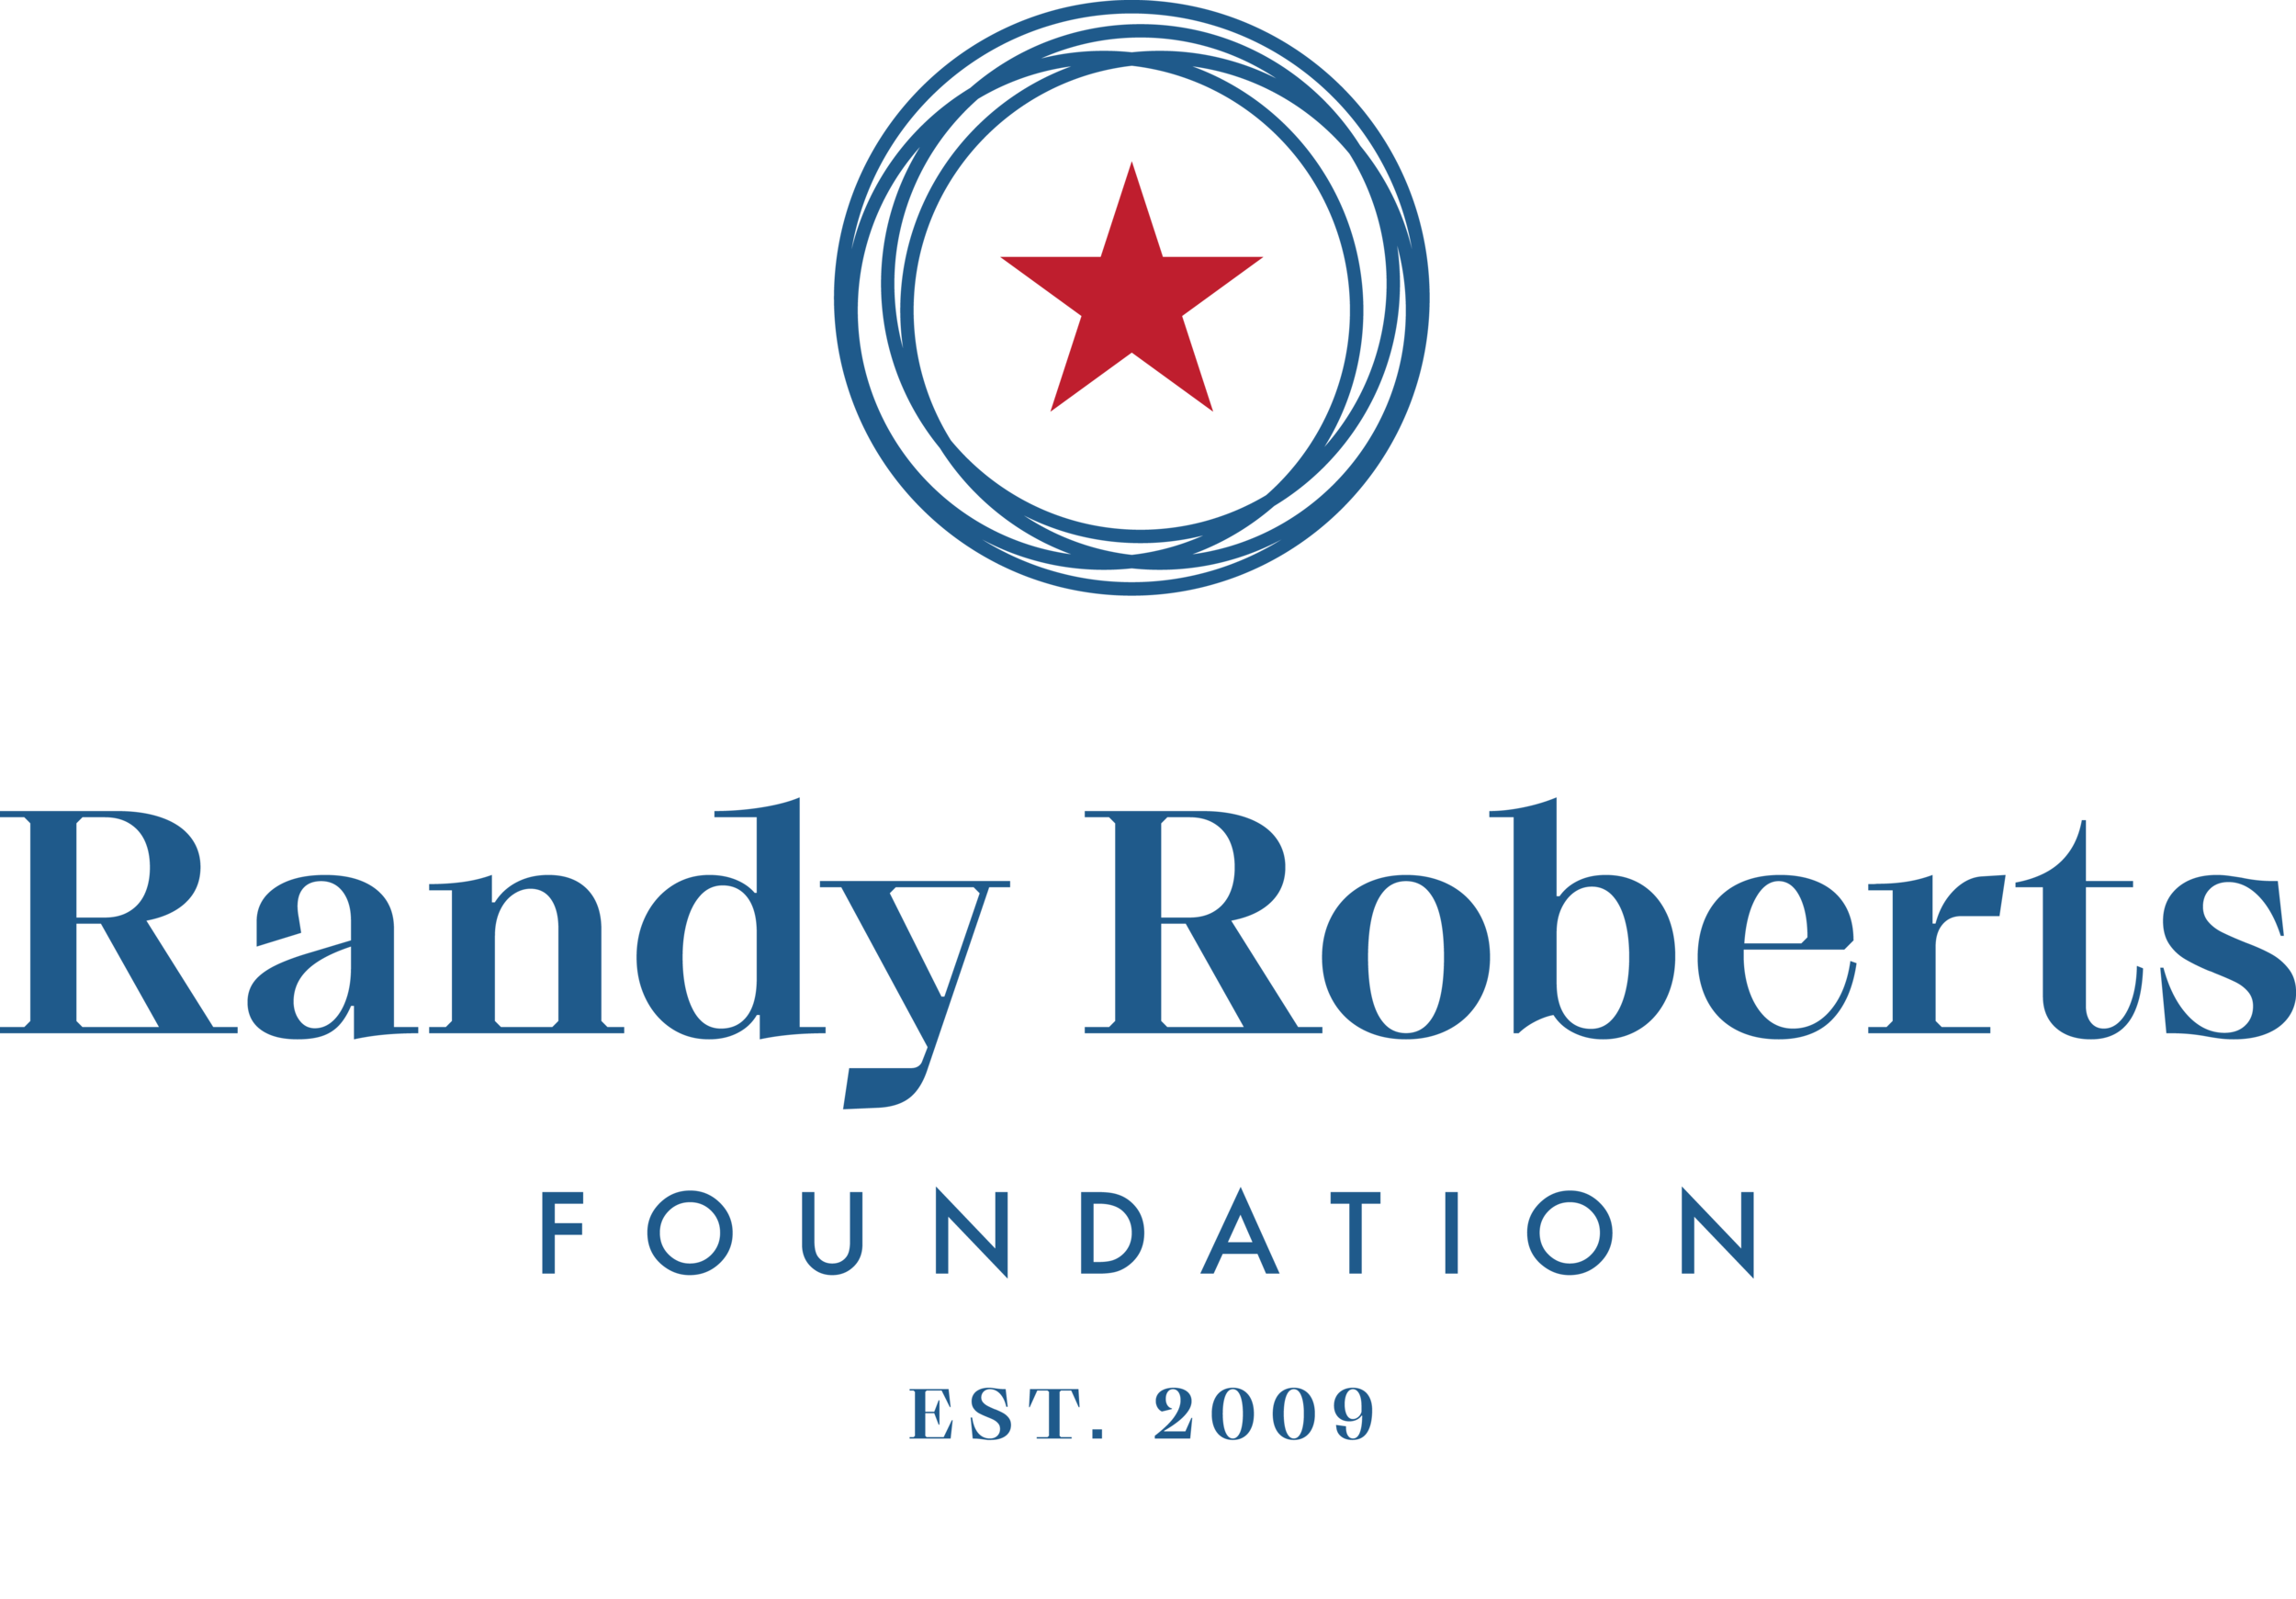 Randy Roberts Foundation